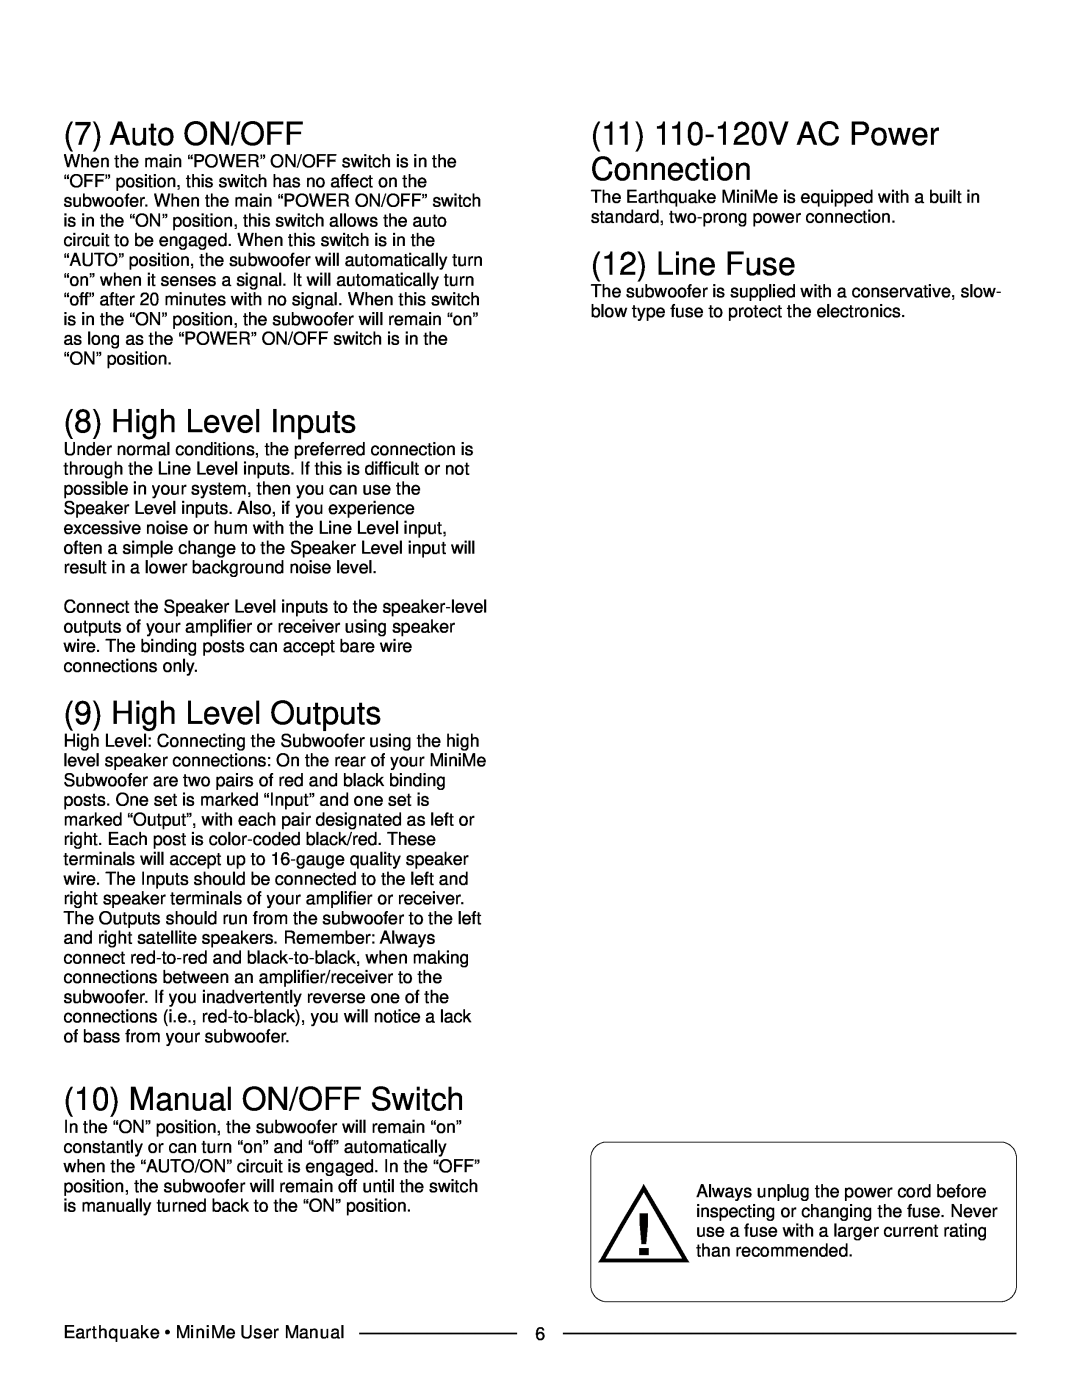 Earthquake Sound FF8 manual Auto ON/OFF, High Level Inputs, High Level Outputs, Manual ON/OFF Switch, Line Fuse 